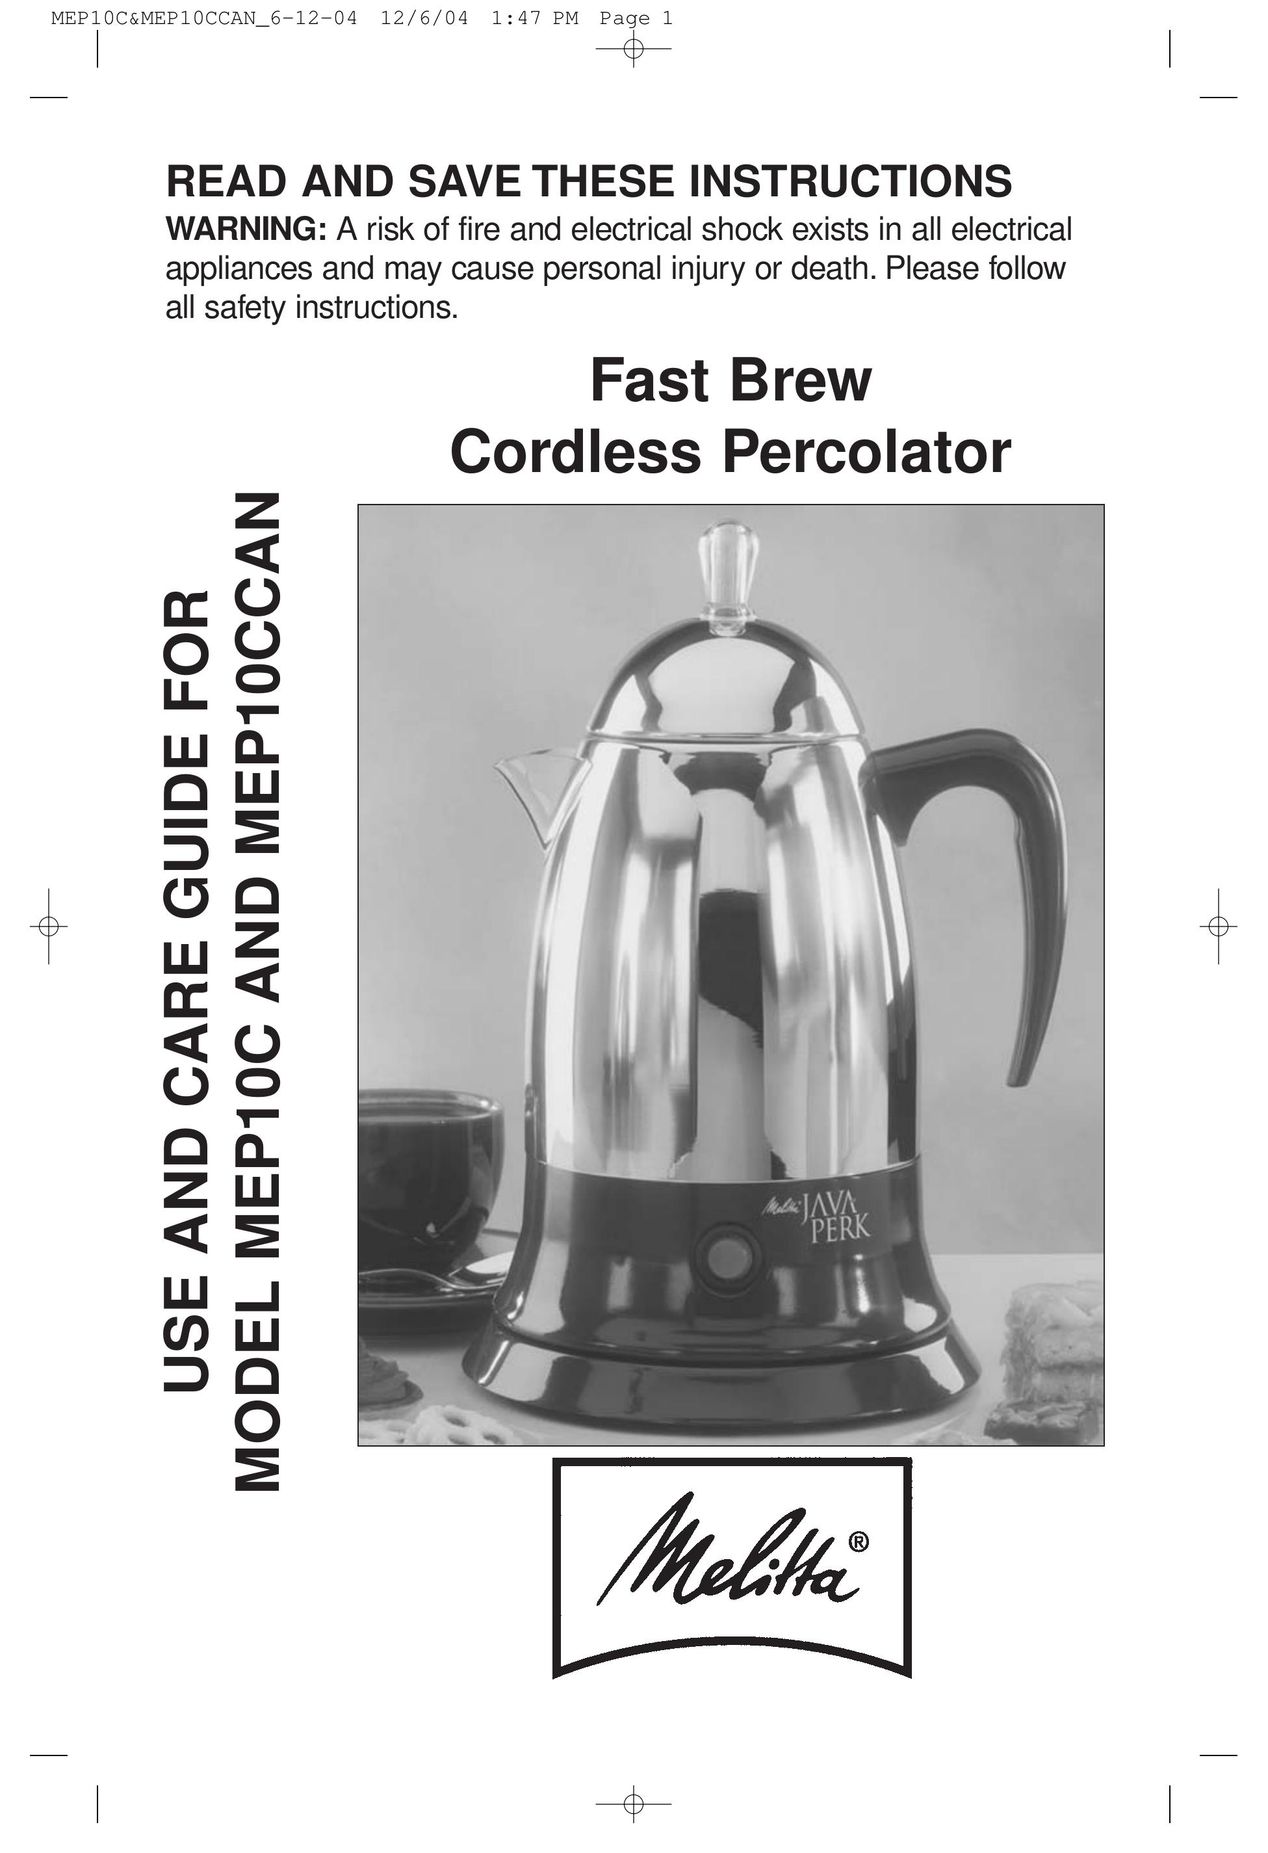 Toastmaster MEP10C Coffeemaker User Manual